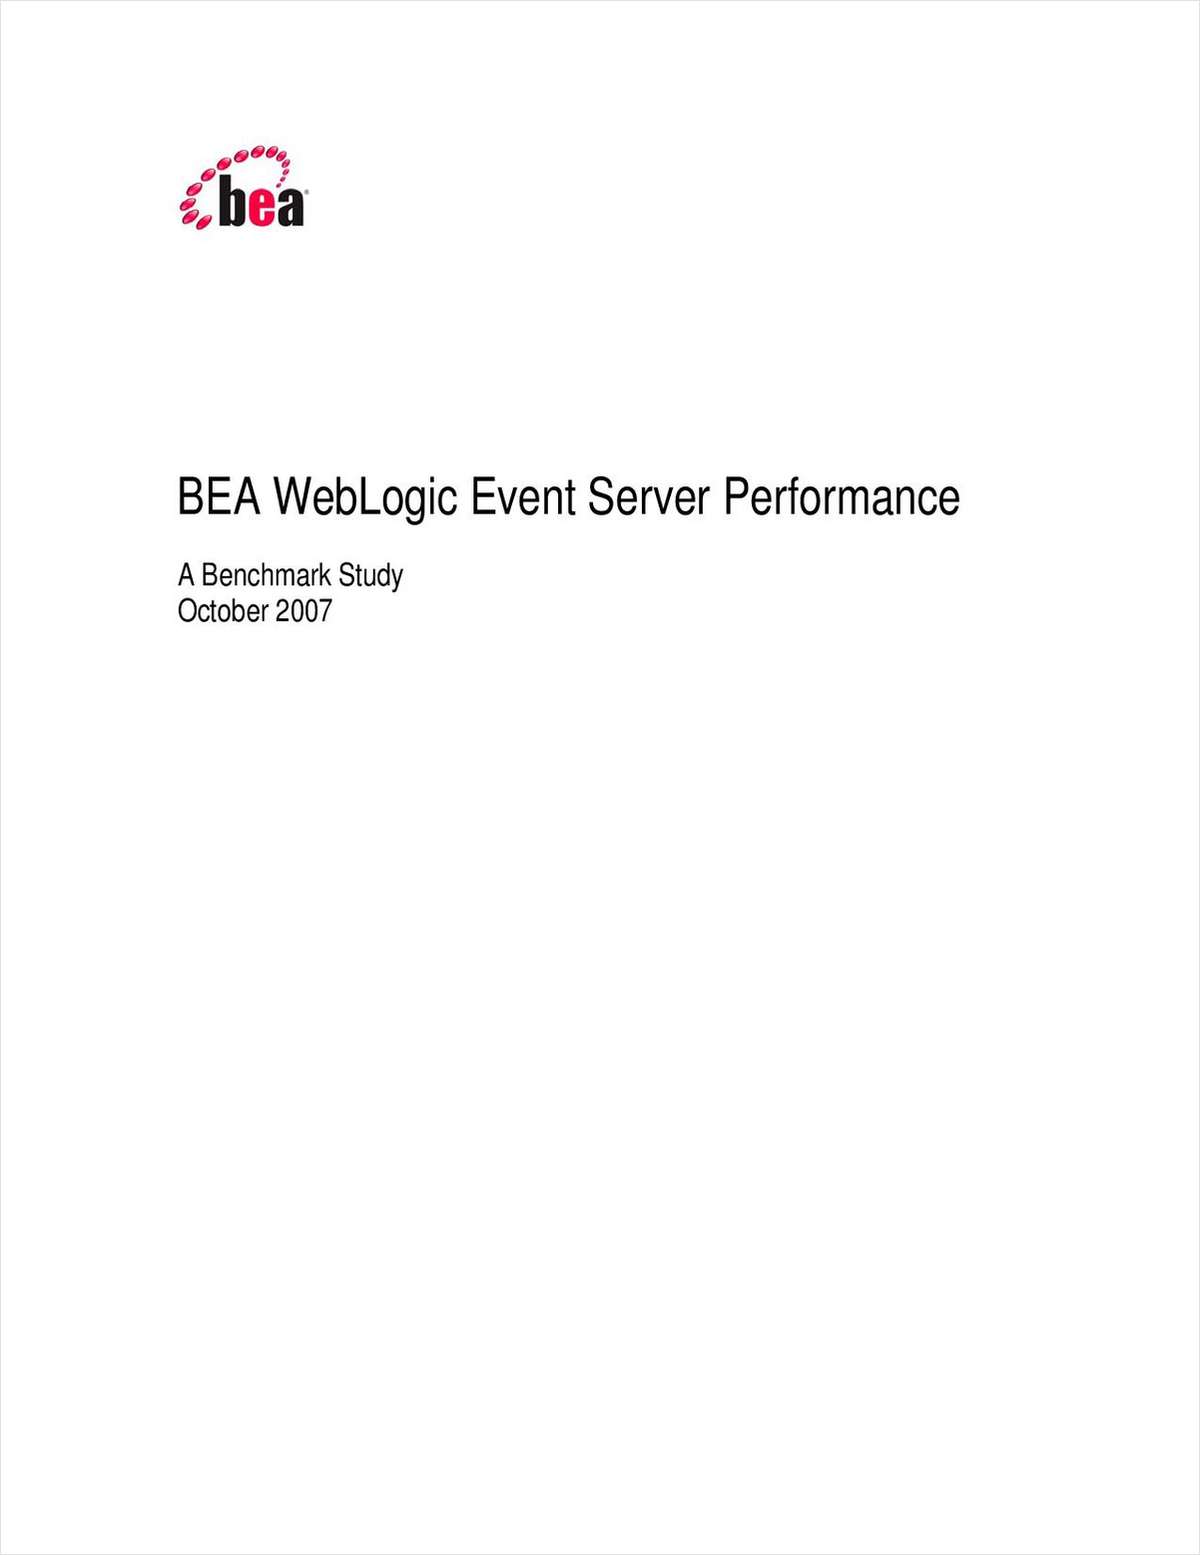 BEA WebLogic Event Server Performance: A Benchmark Study